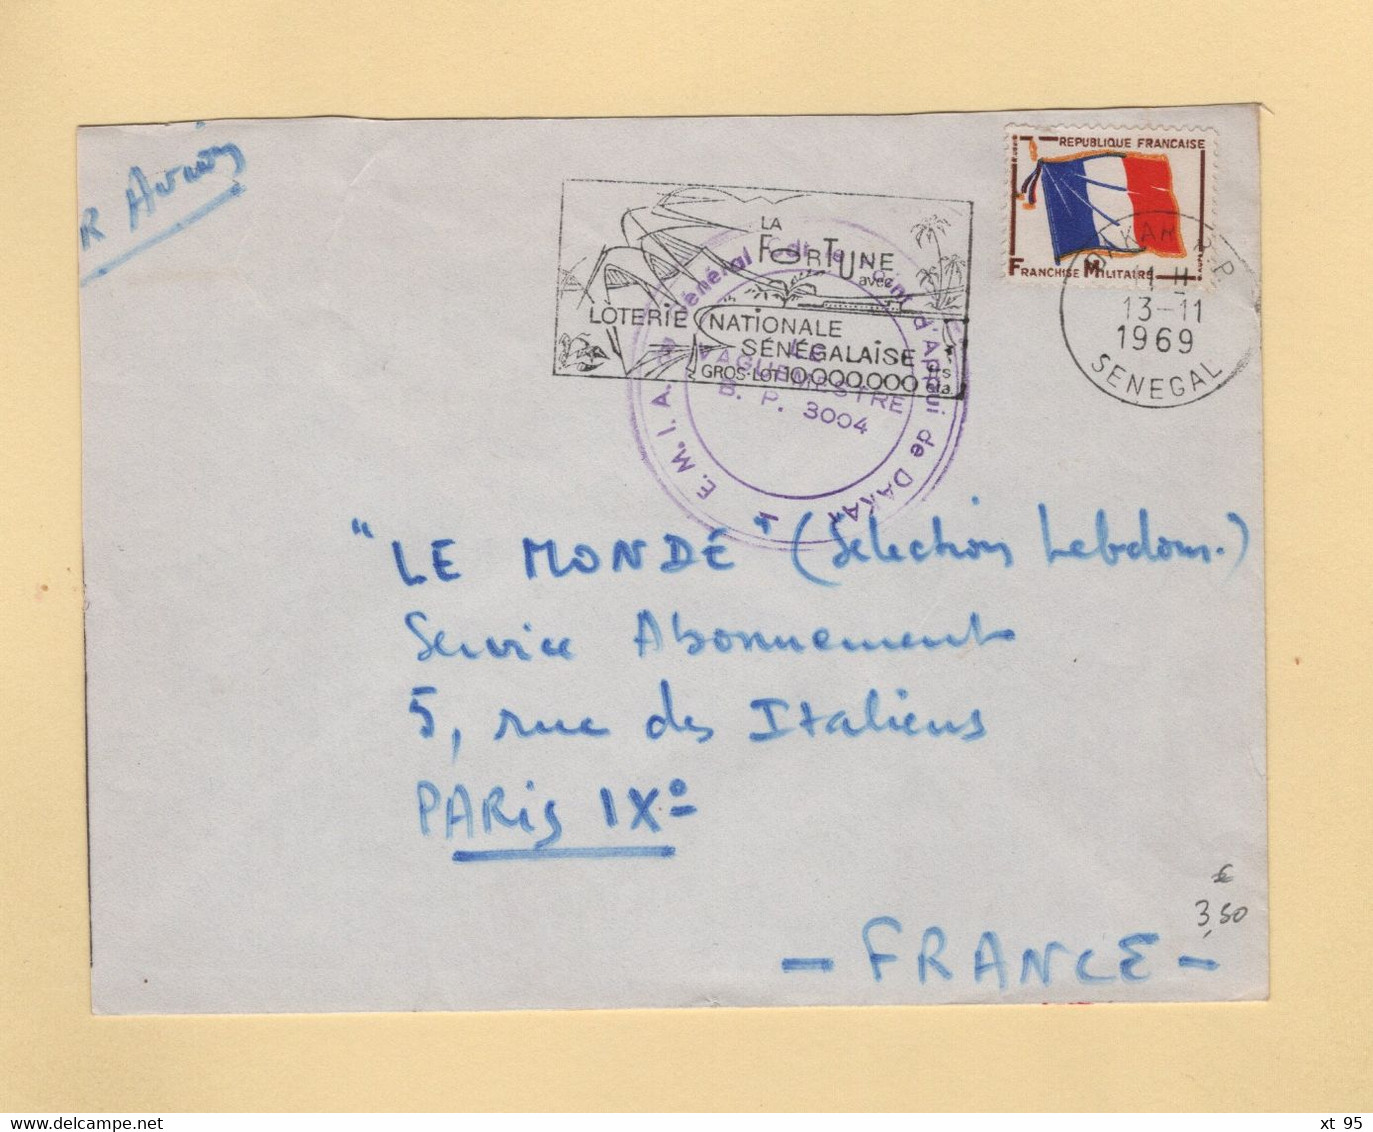 Timbre FM - Senegal - Dakar - 1969 - Point D Appui - Military Postage Stamps